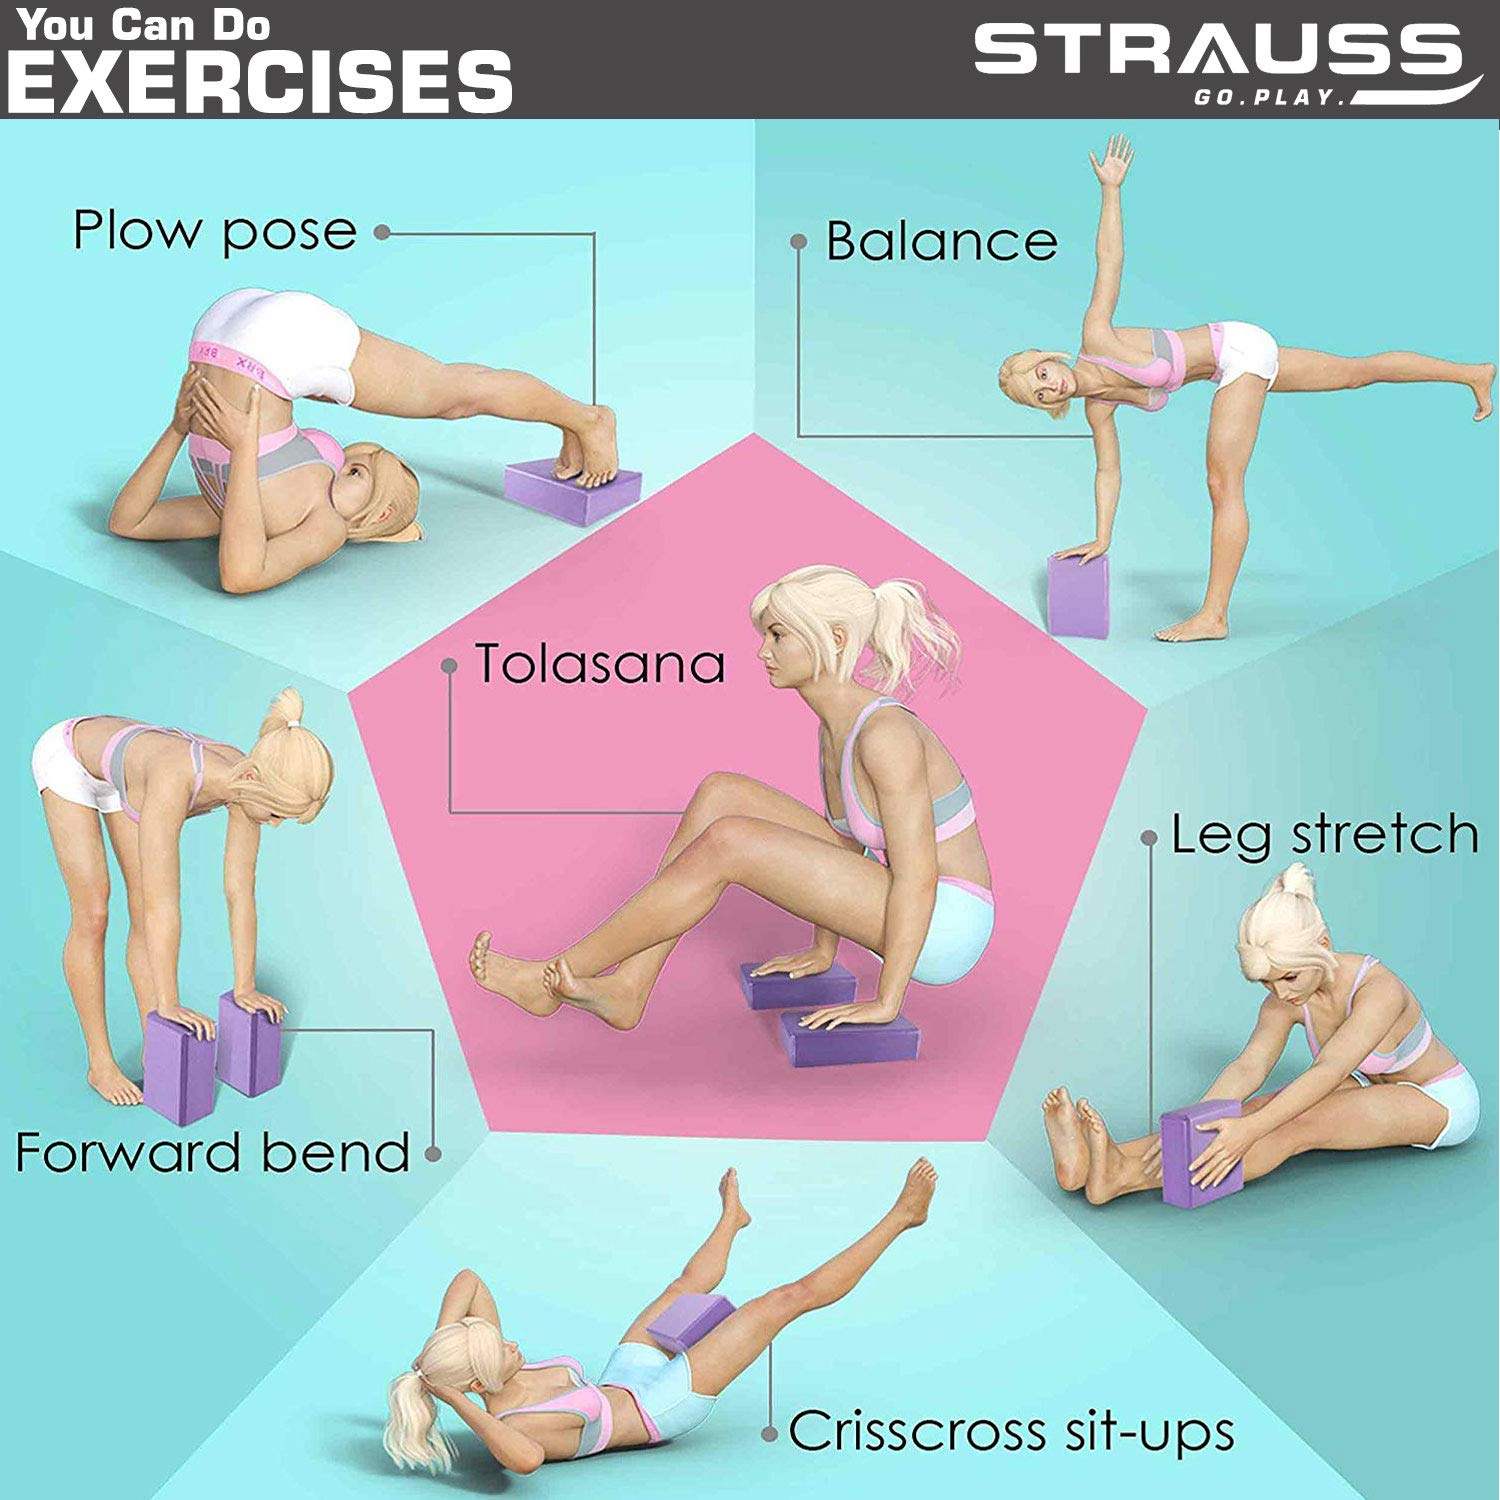 Strauss Yoga Mat Butterfly (Orange) 5 MM, Yoga Block (Orange) Pair, Anti-Slip Yoga Towel (Blue) and Yoga Belt (Orange)